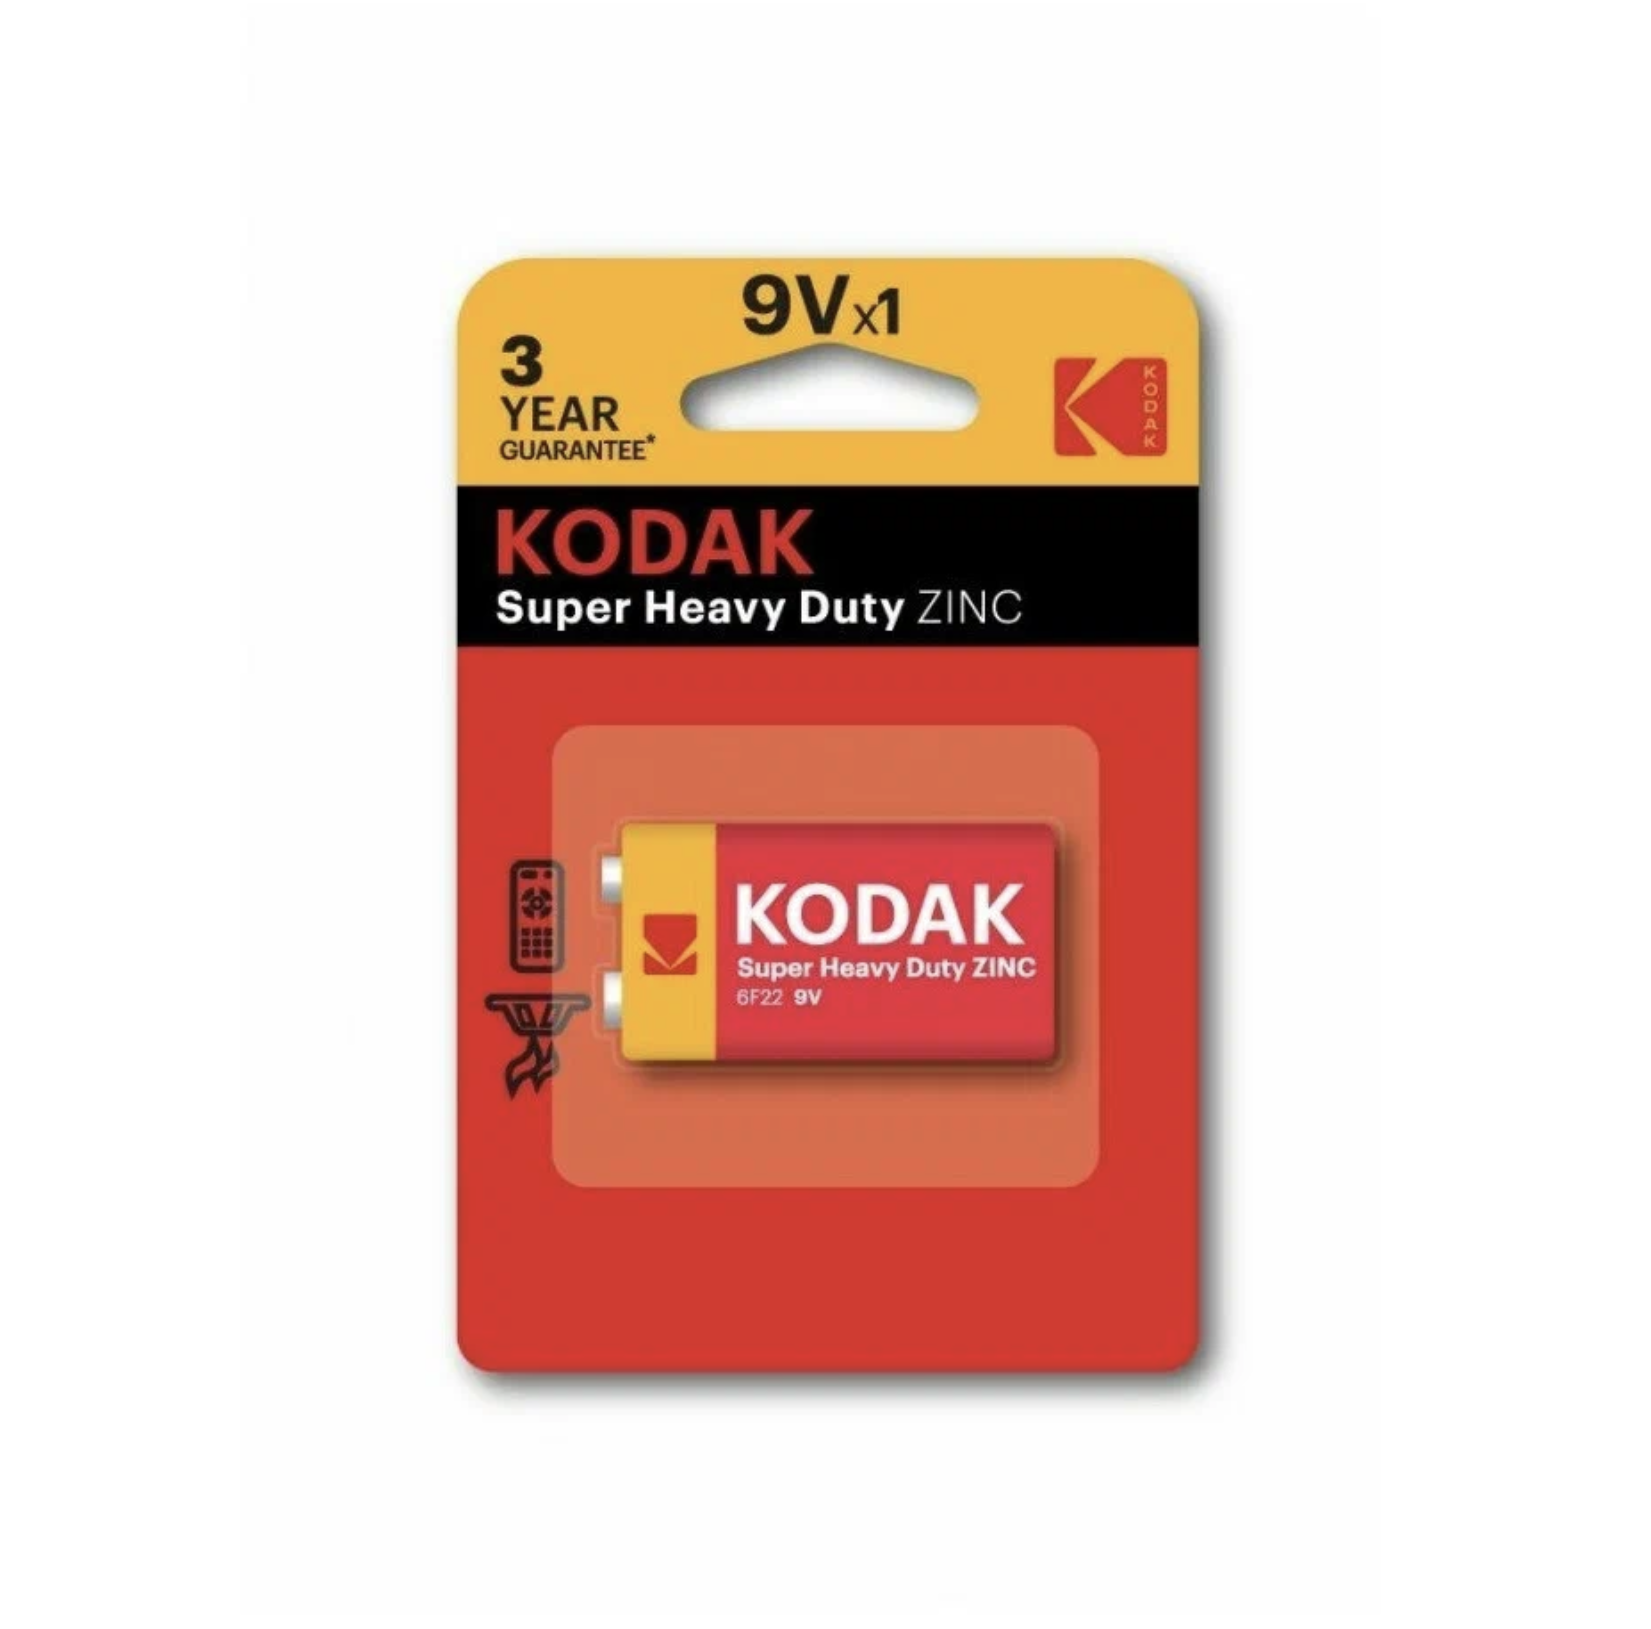   / Kodak -  Super Heavy Duty Zinc 6F22 9V 1 